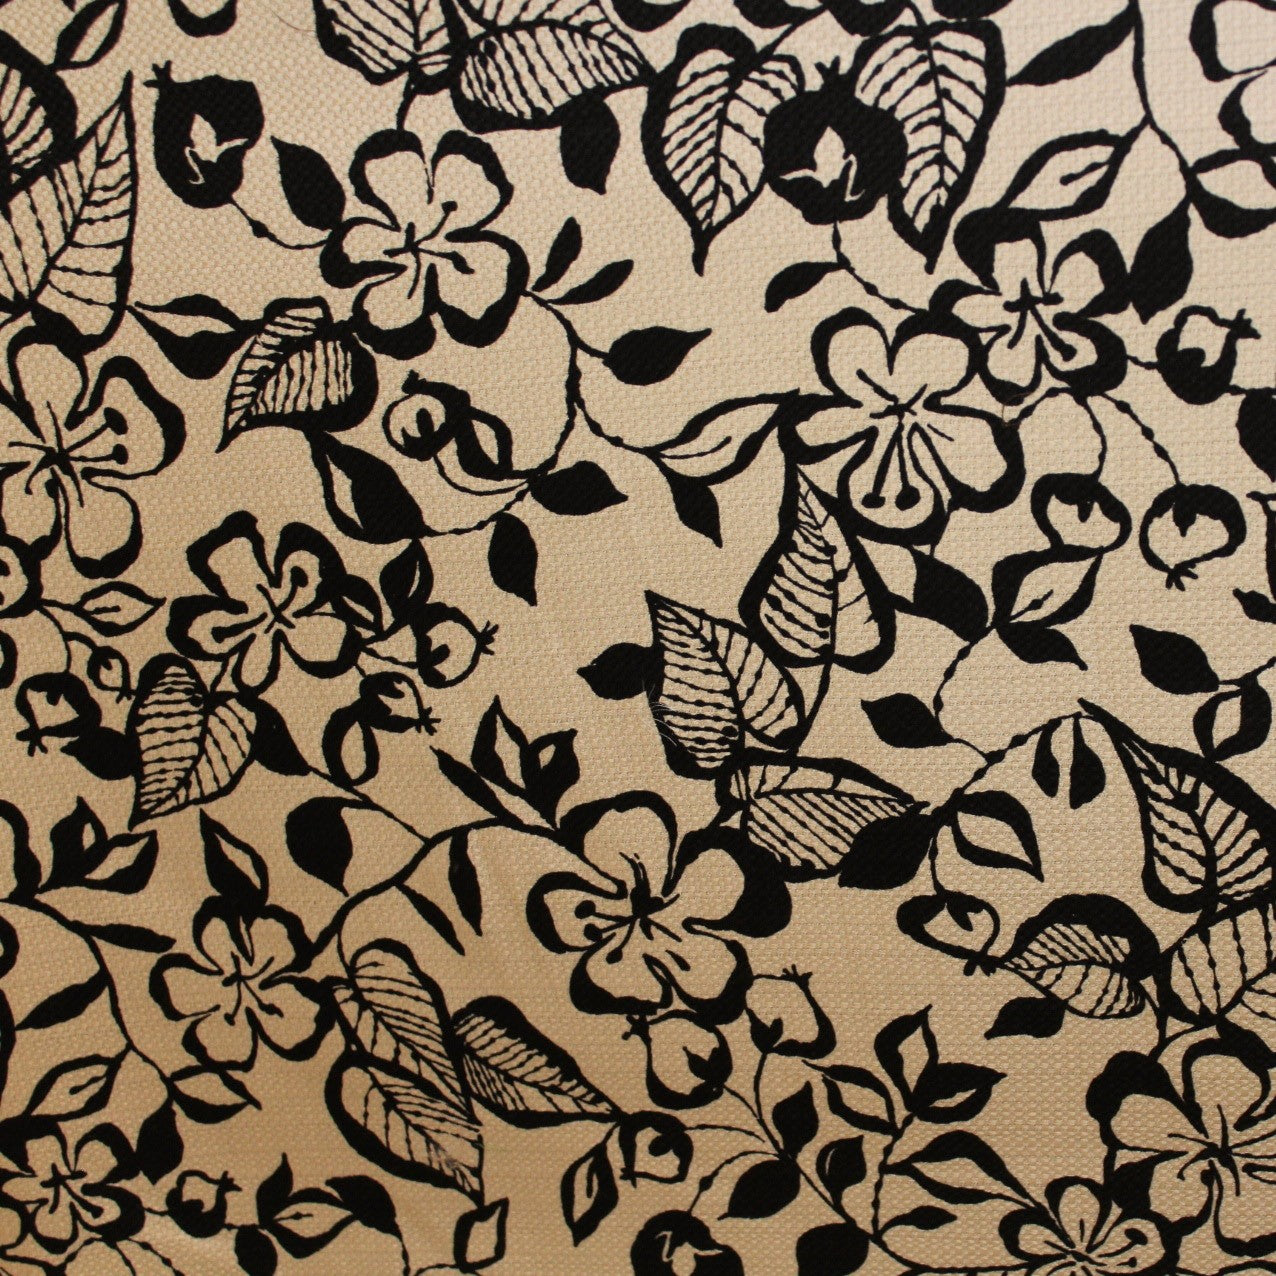 Graphic Floral Printed Cotton Pique - Black/Tan